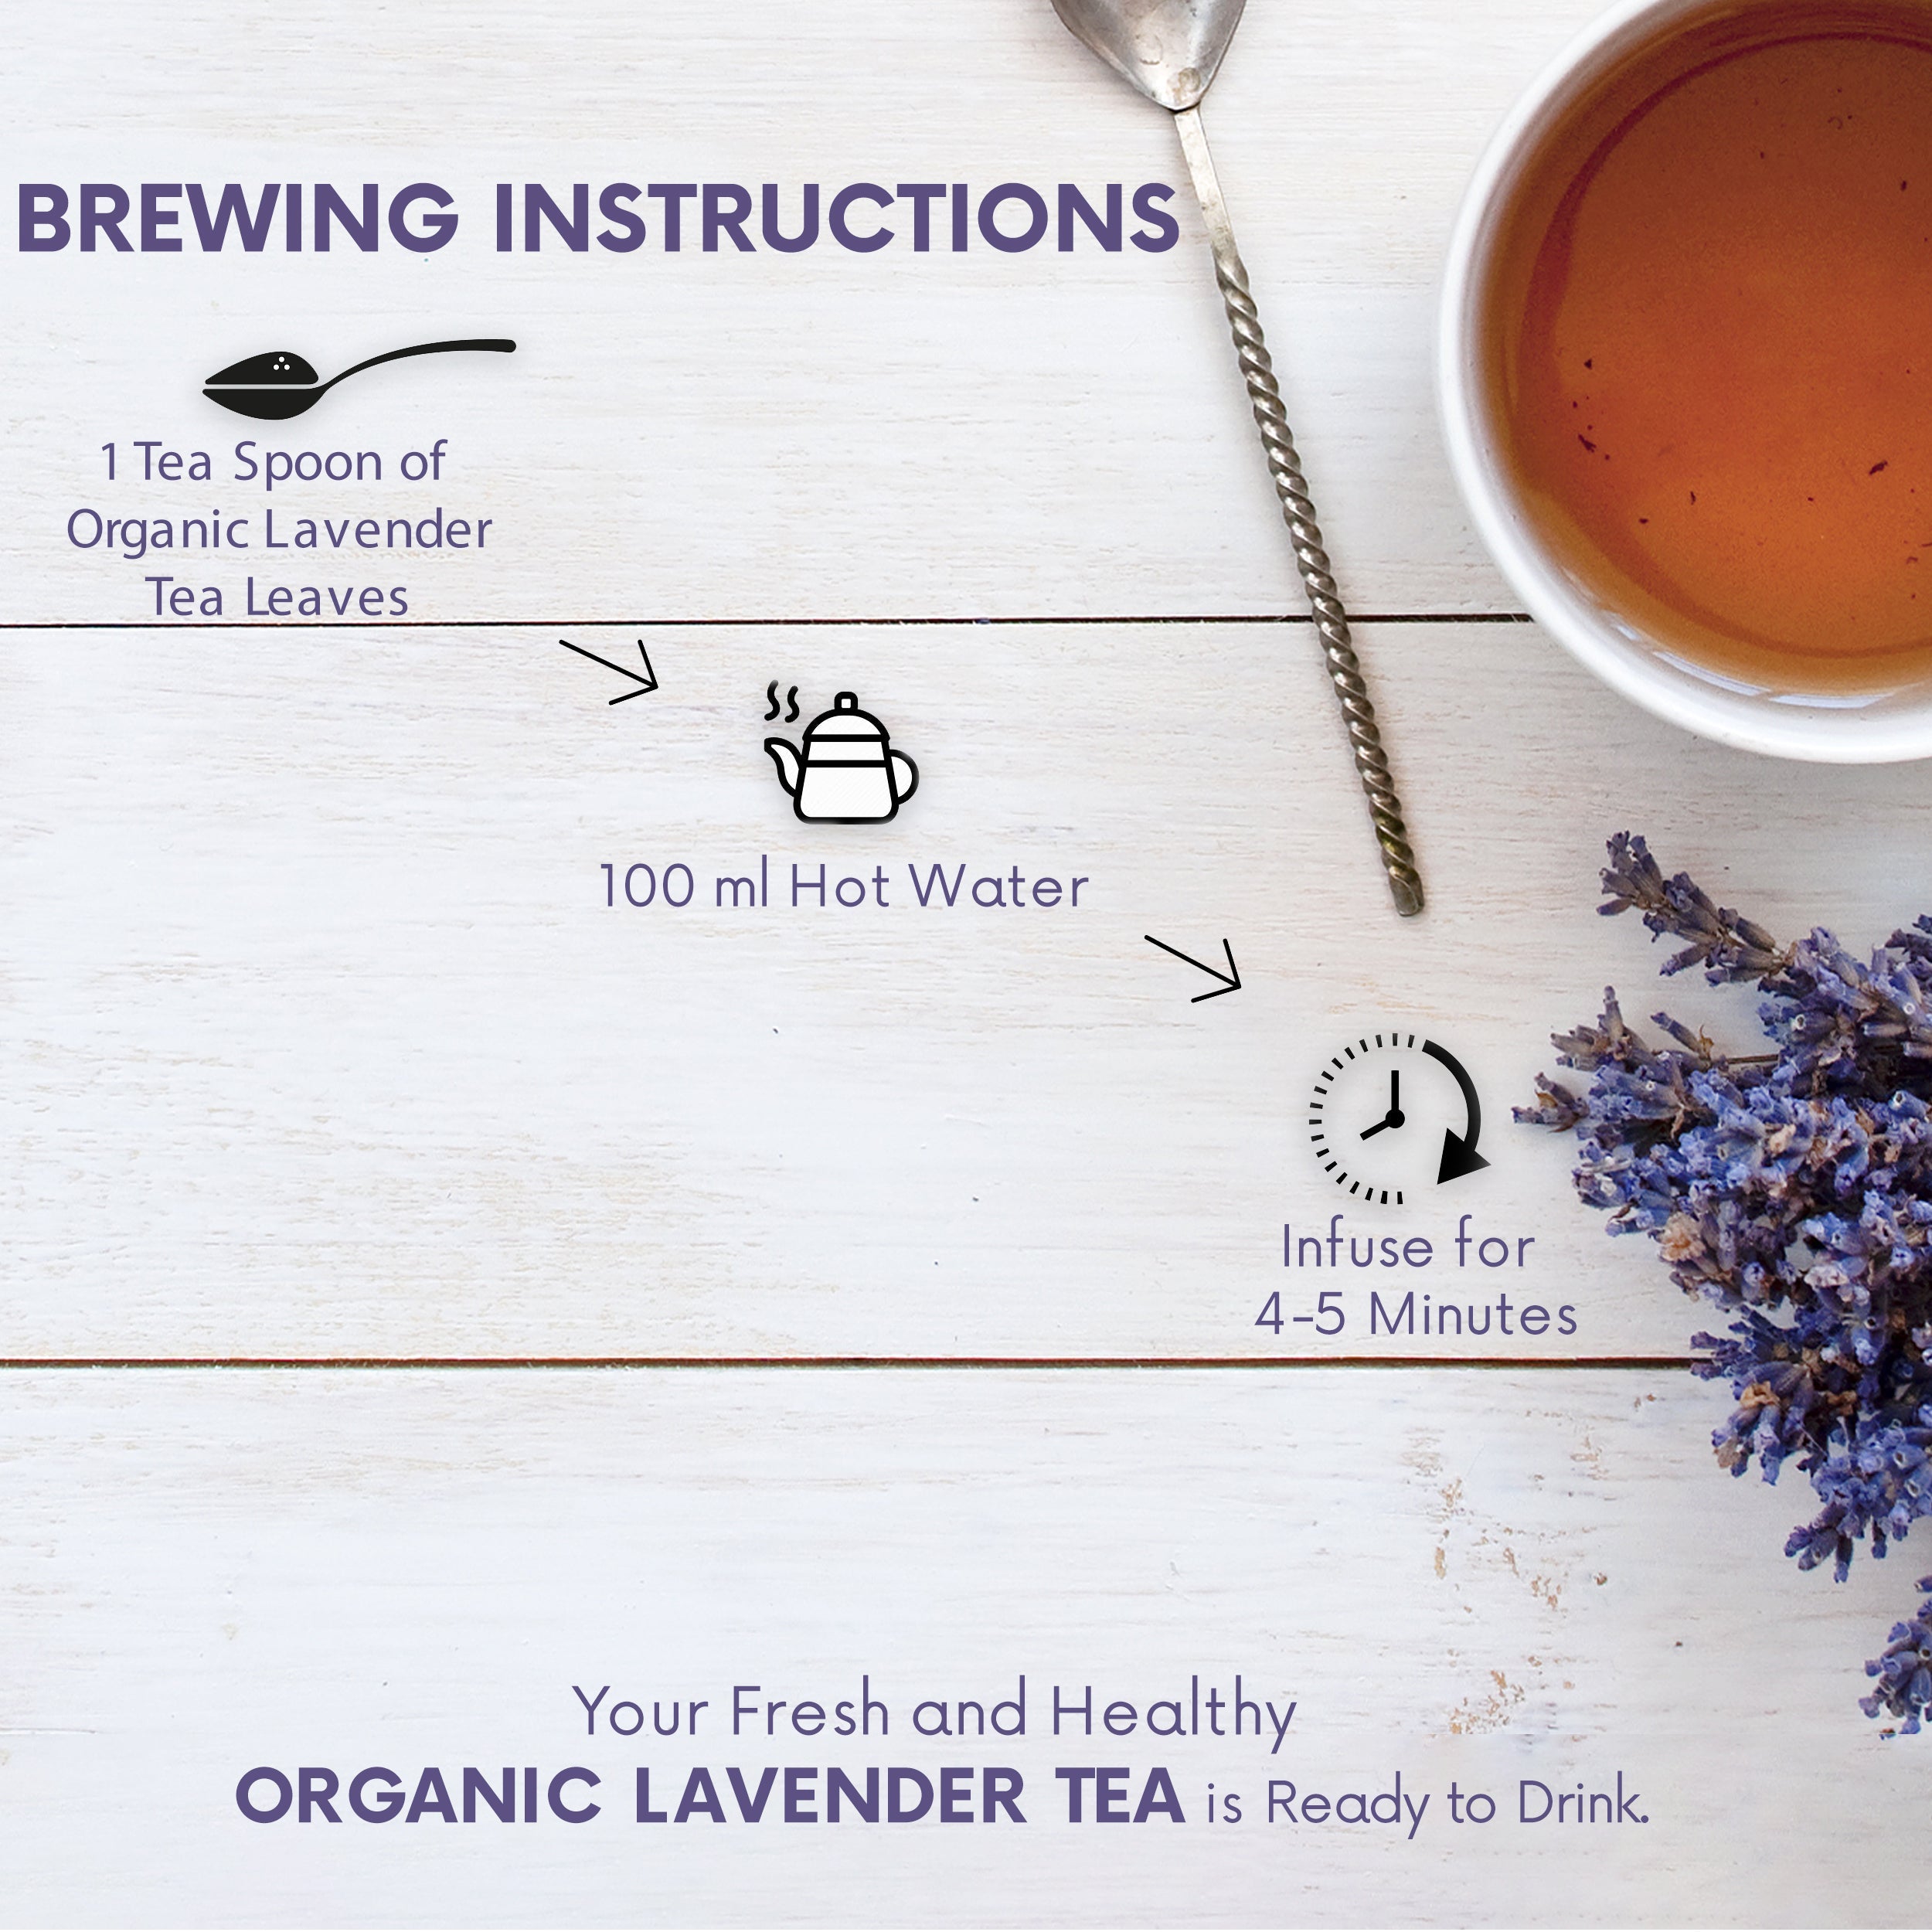 The Tea Ark Lavender Peppermint Green Tea, Bedtime Tea for Sleep & Stress Management